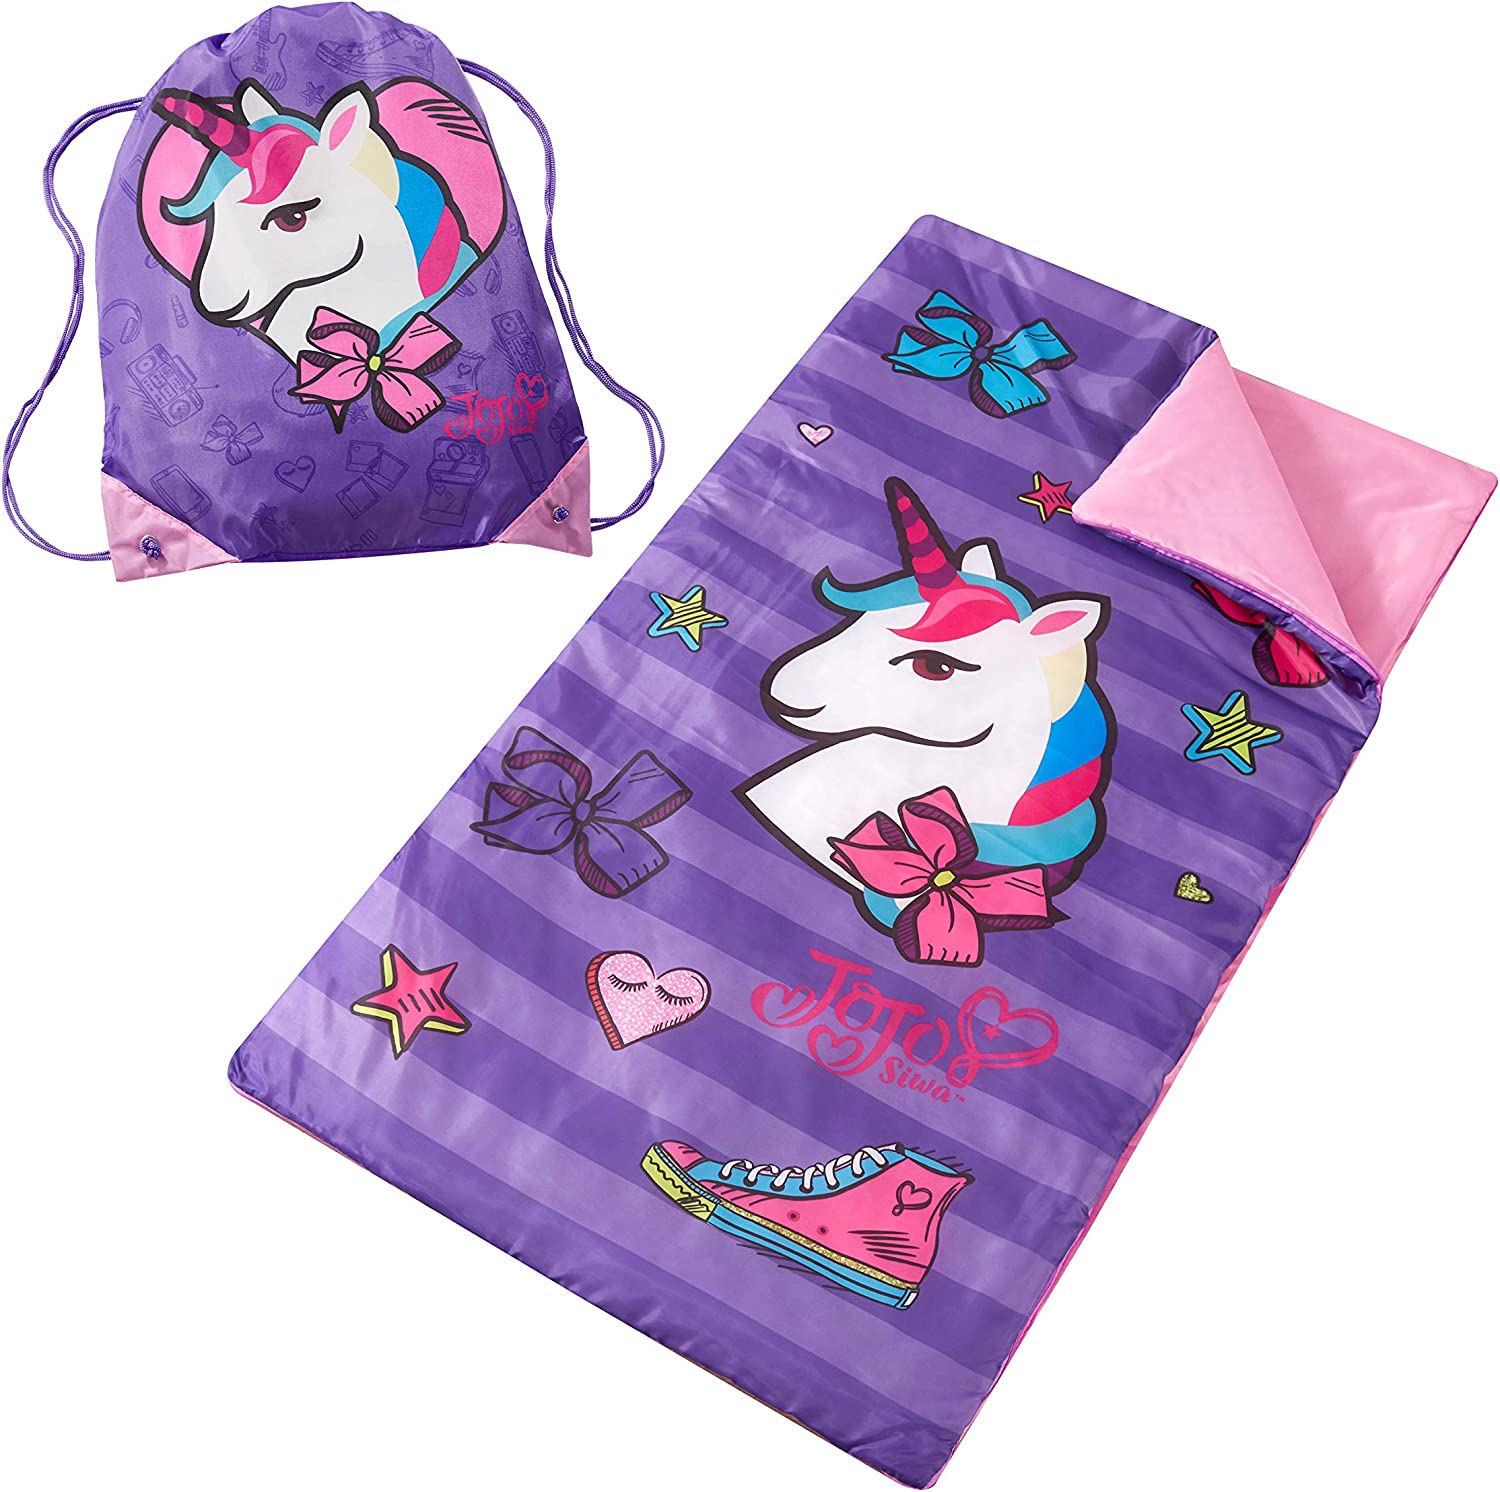 Idea Nuova Polyester Gift Unicorn Sleeping Bags For Girls